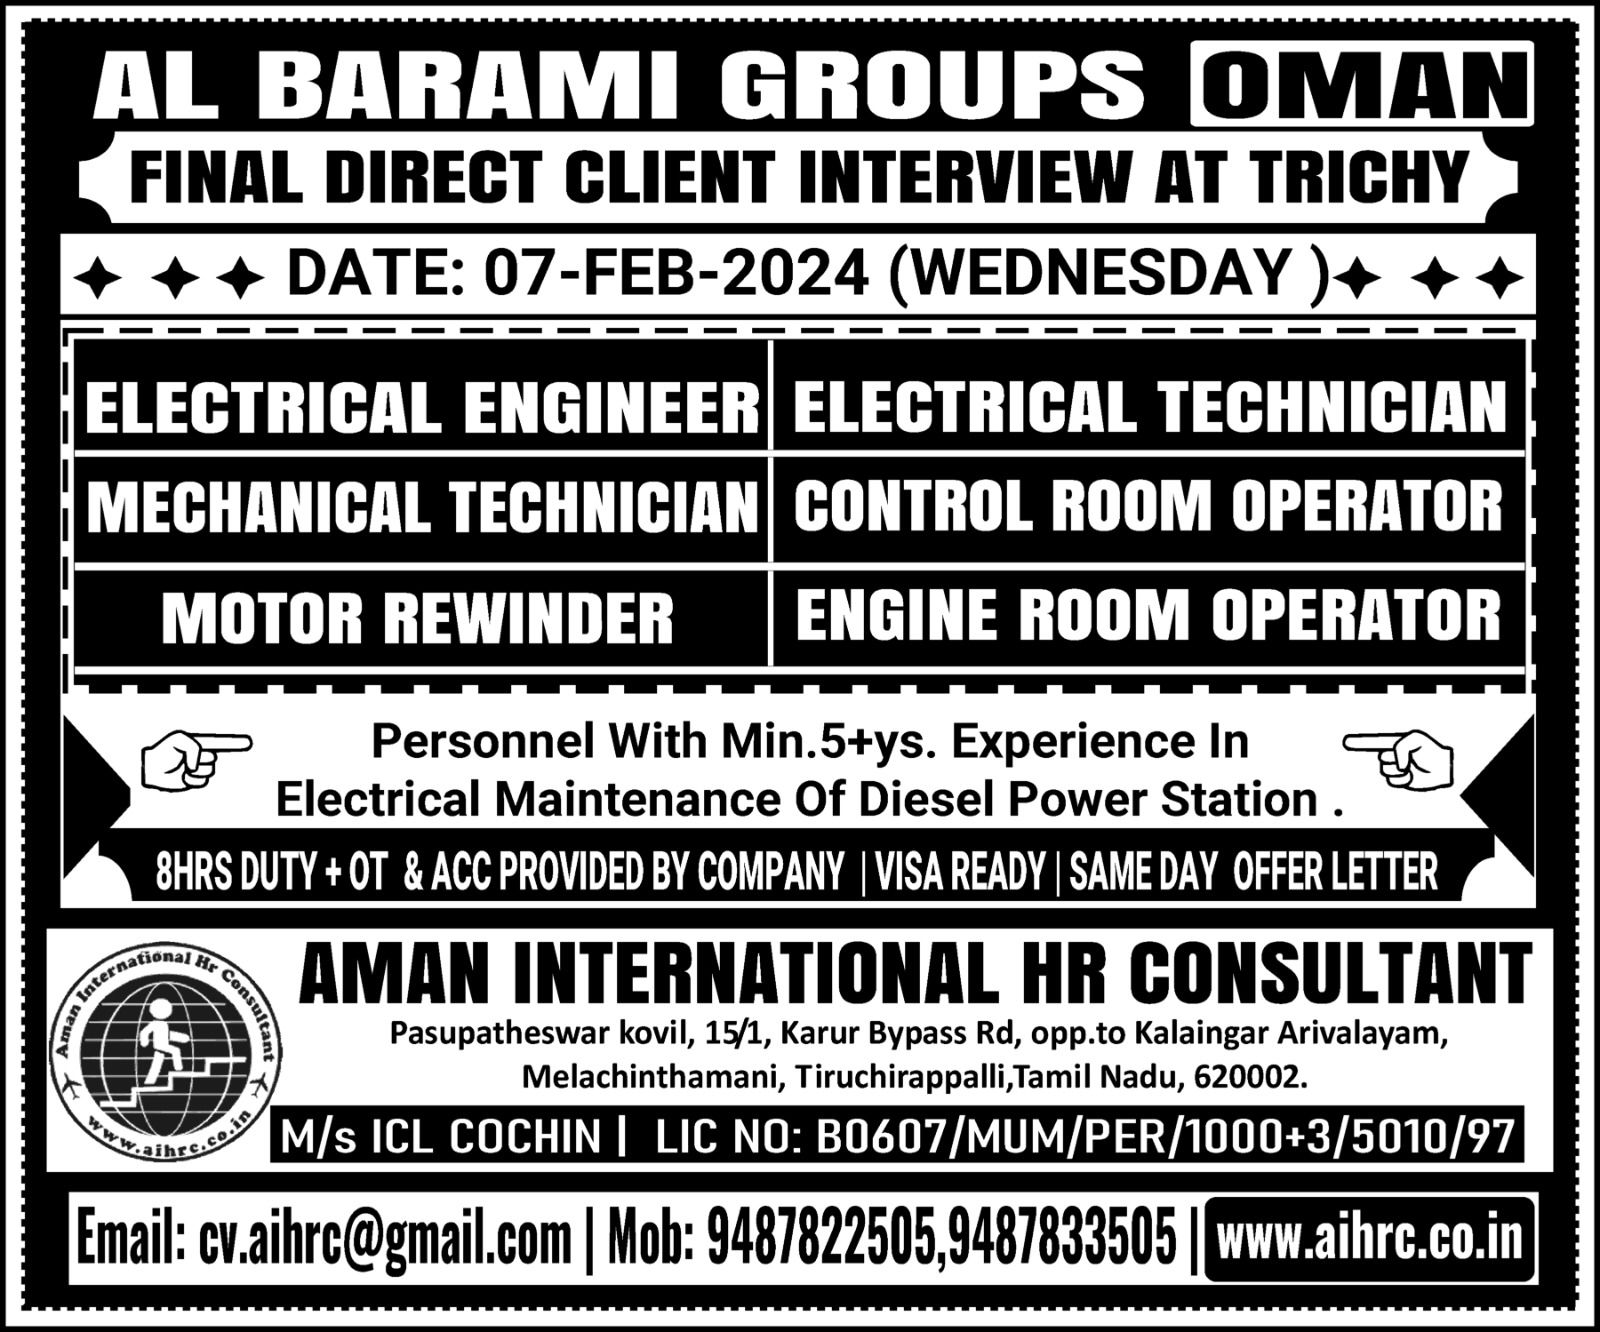 Hiring for Al Barami Groups Oman 